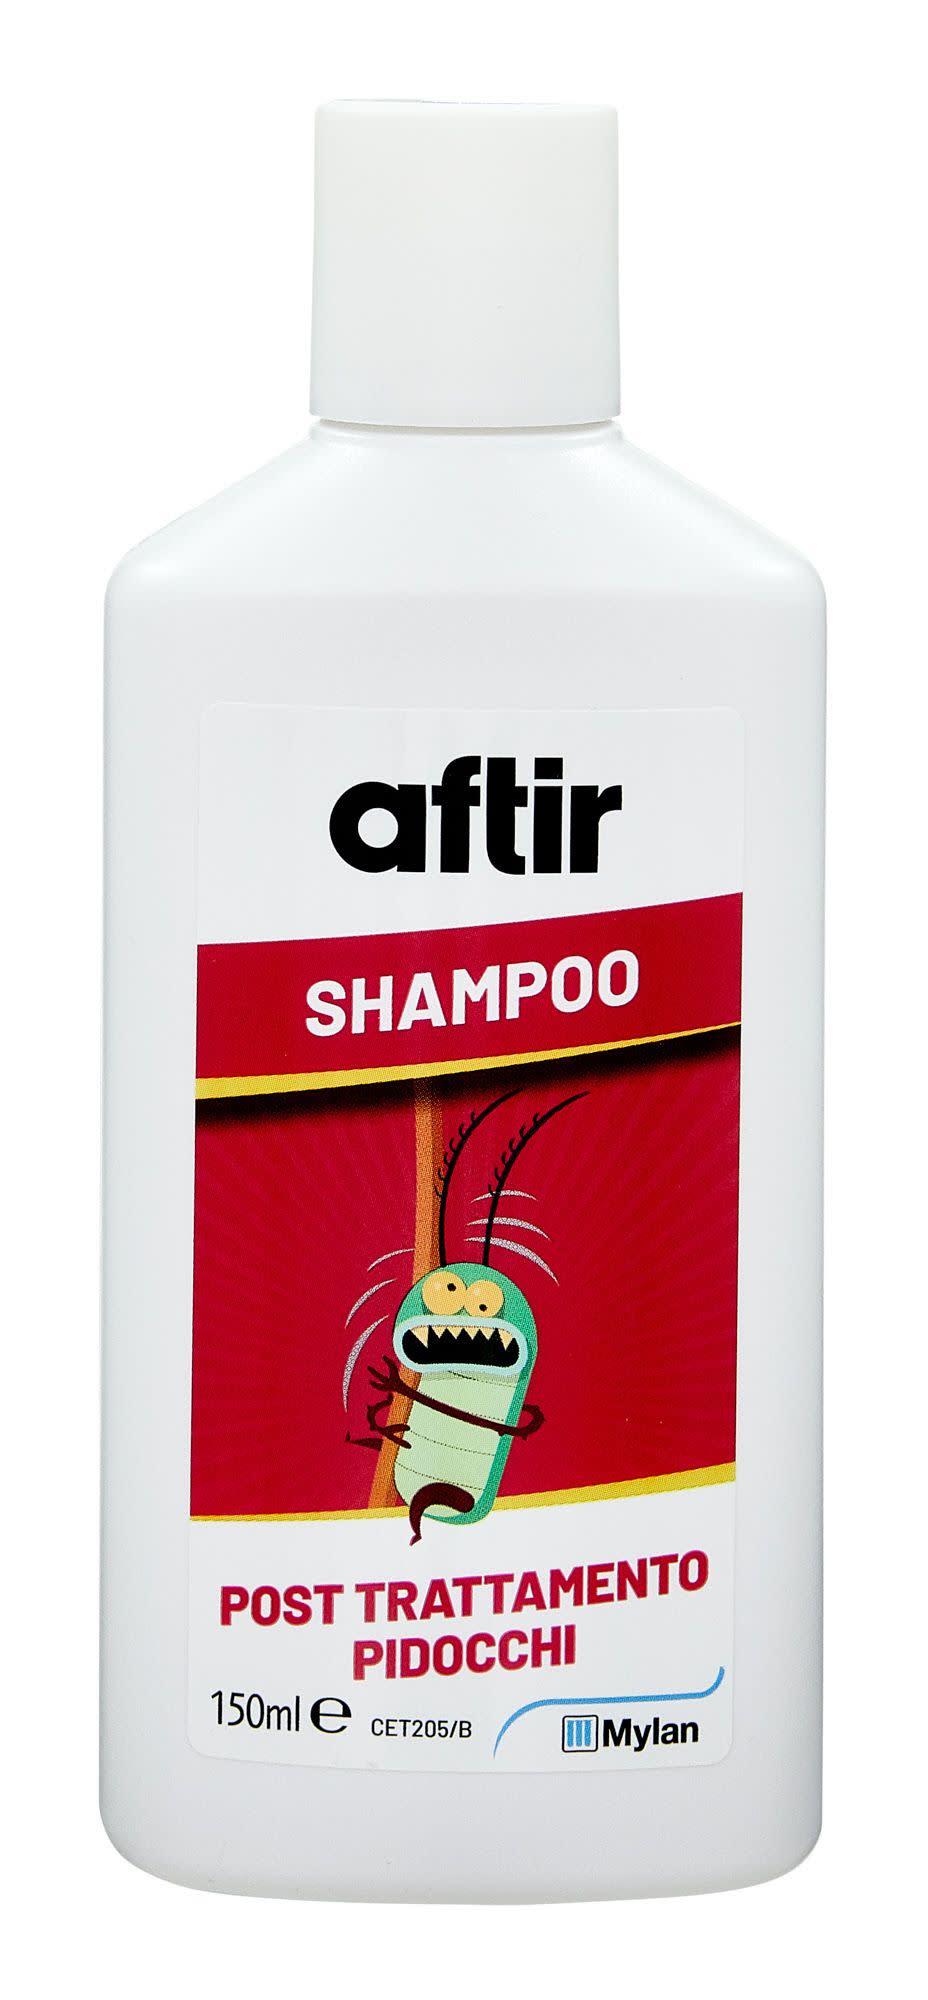 905353645 - Aftir Shampoo post trattamento pidocchi 150ml - 7867780_3.jpg